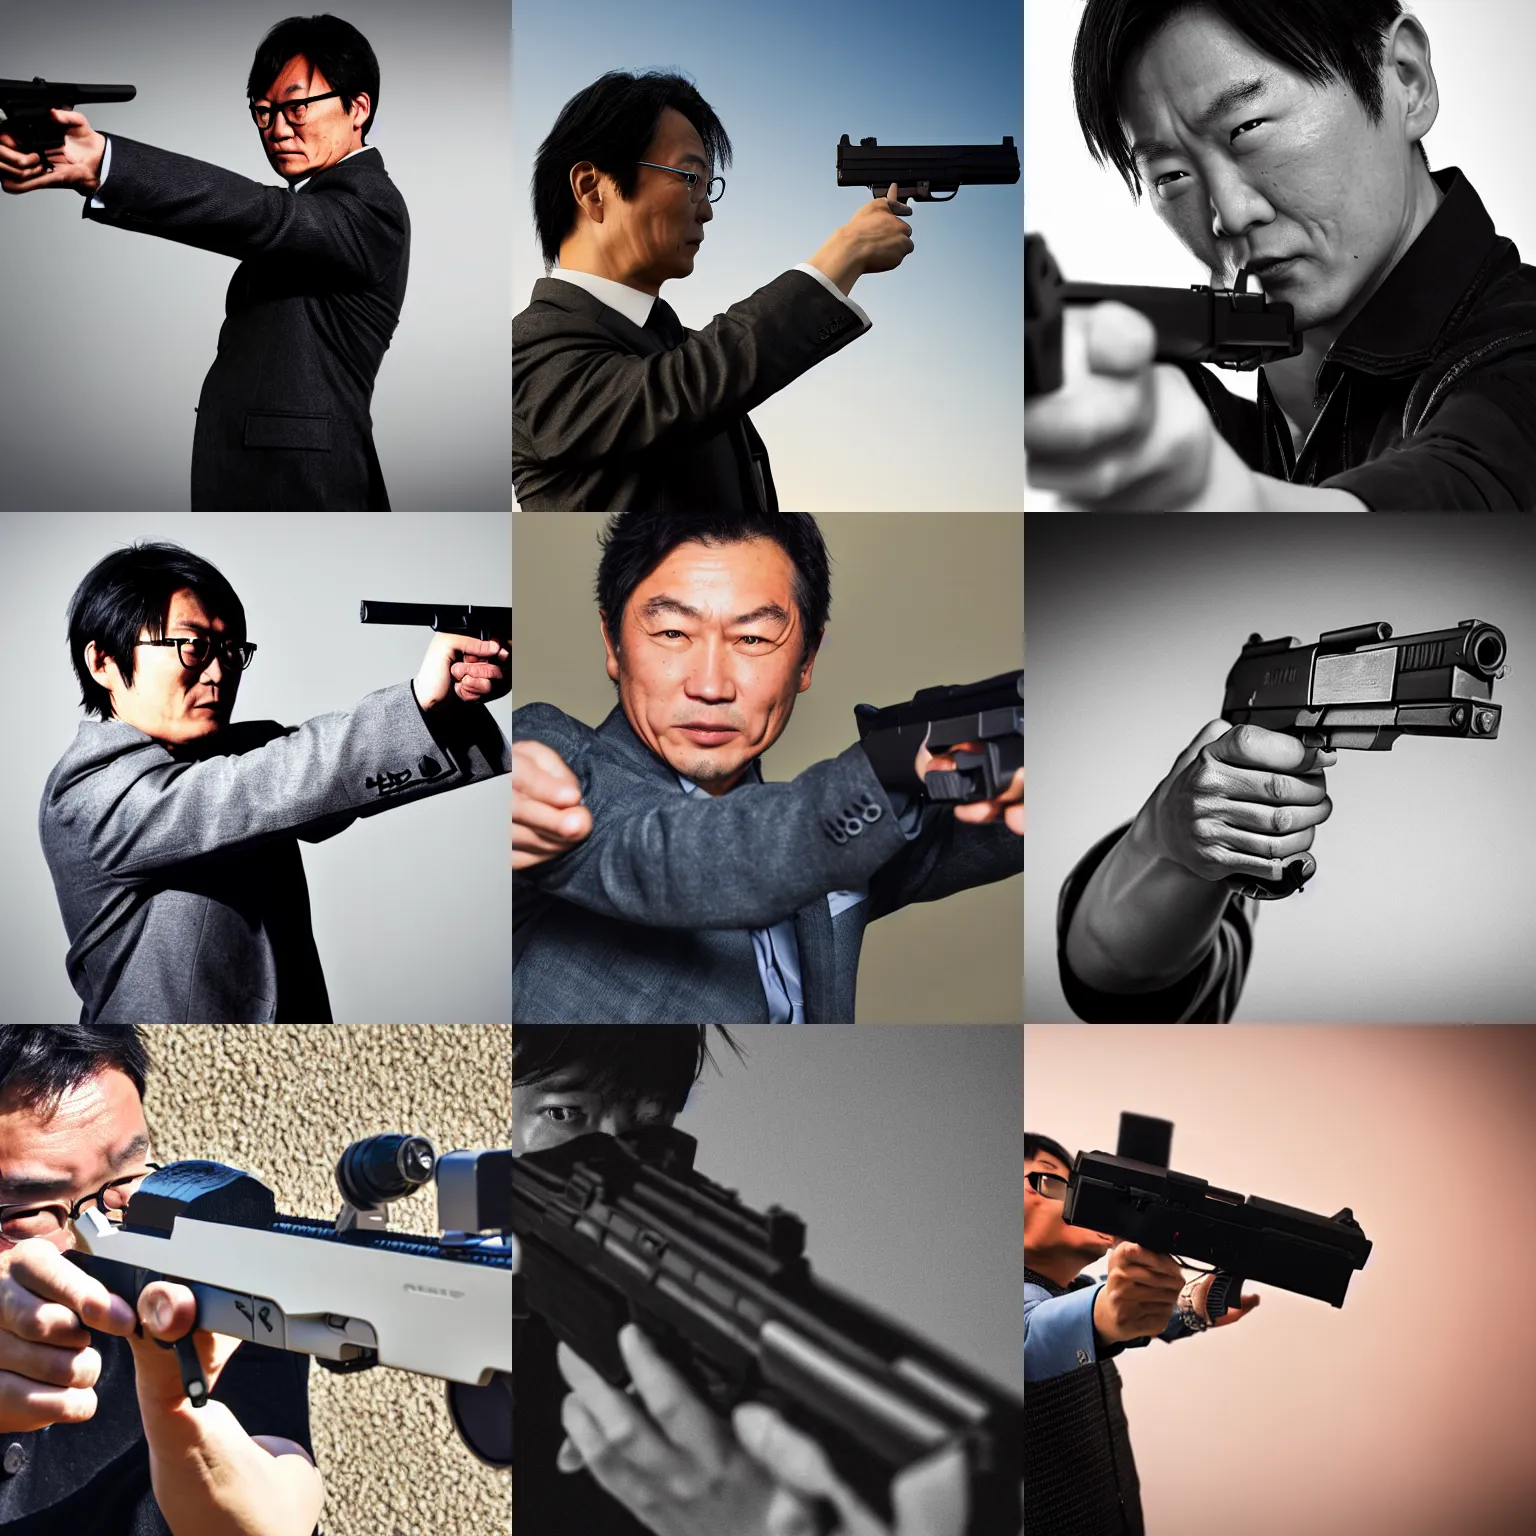 Prompt: naoki yoshida pointing a gun at you, hd, photography